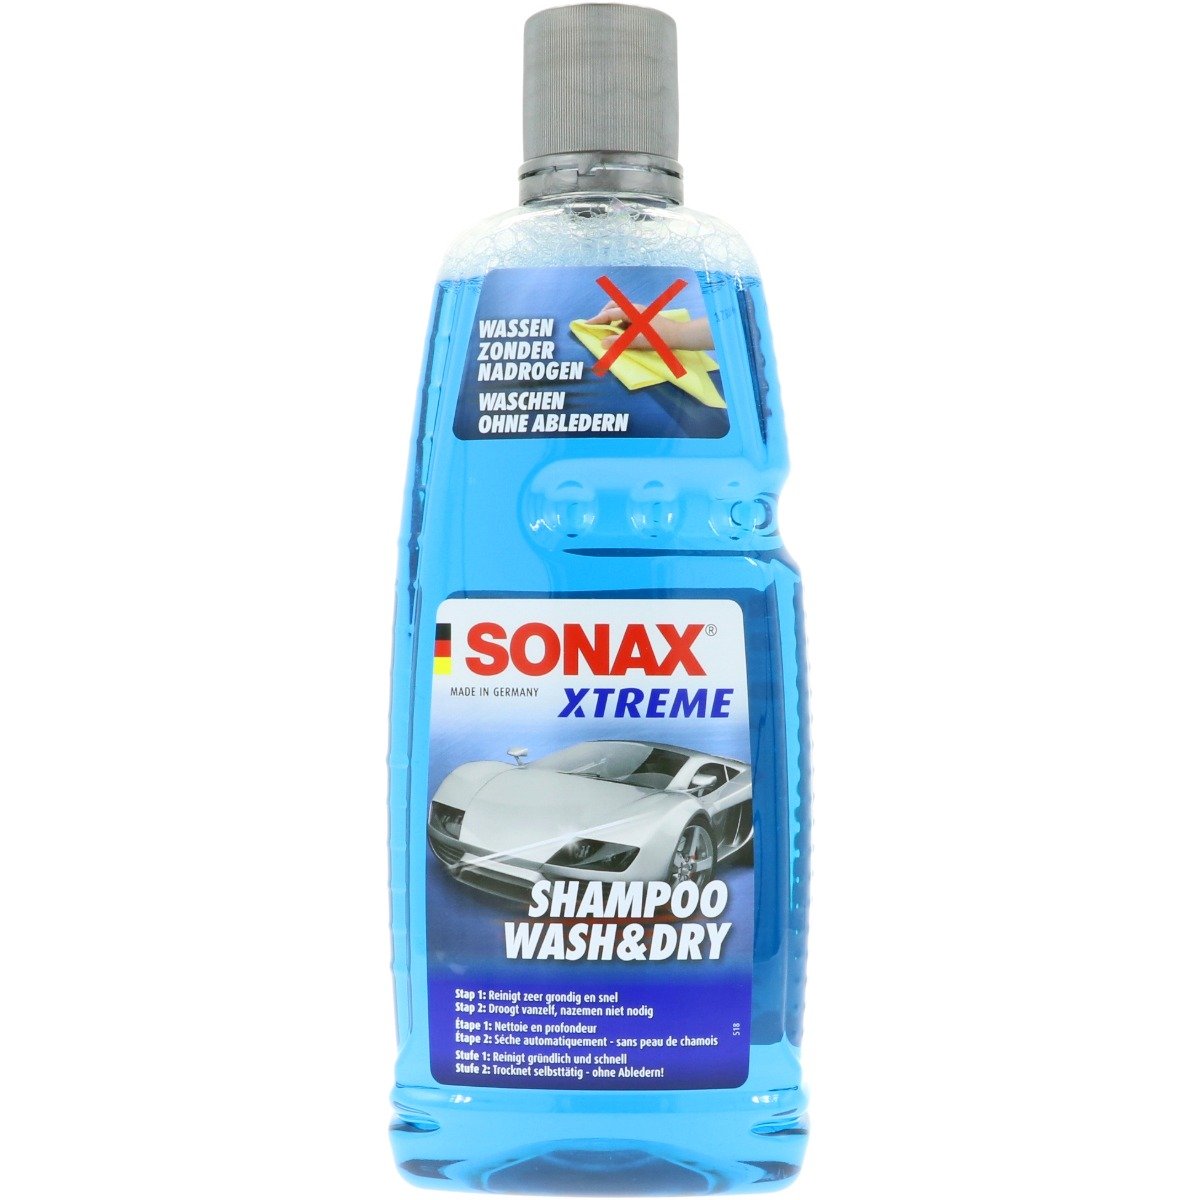 Xtreme Shampoo Wash & Dry - 1000ml